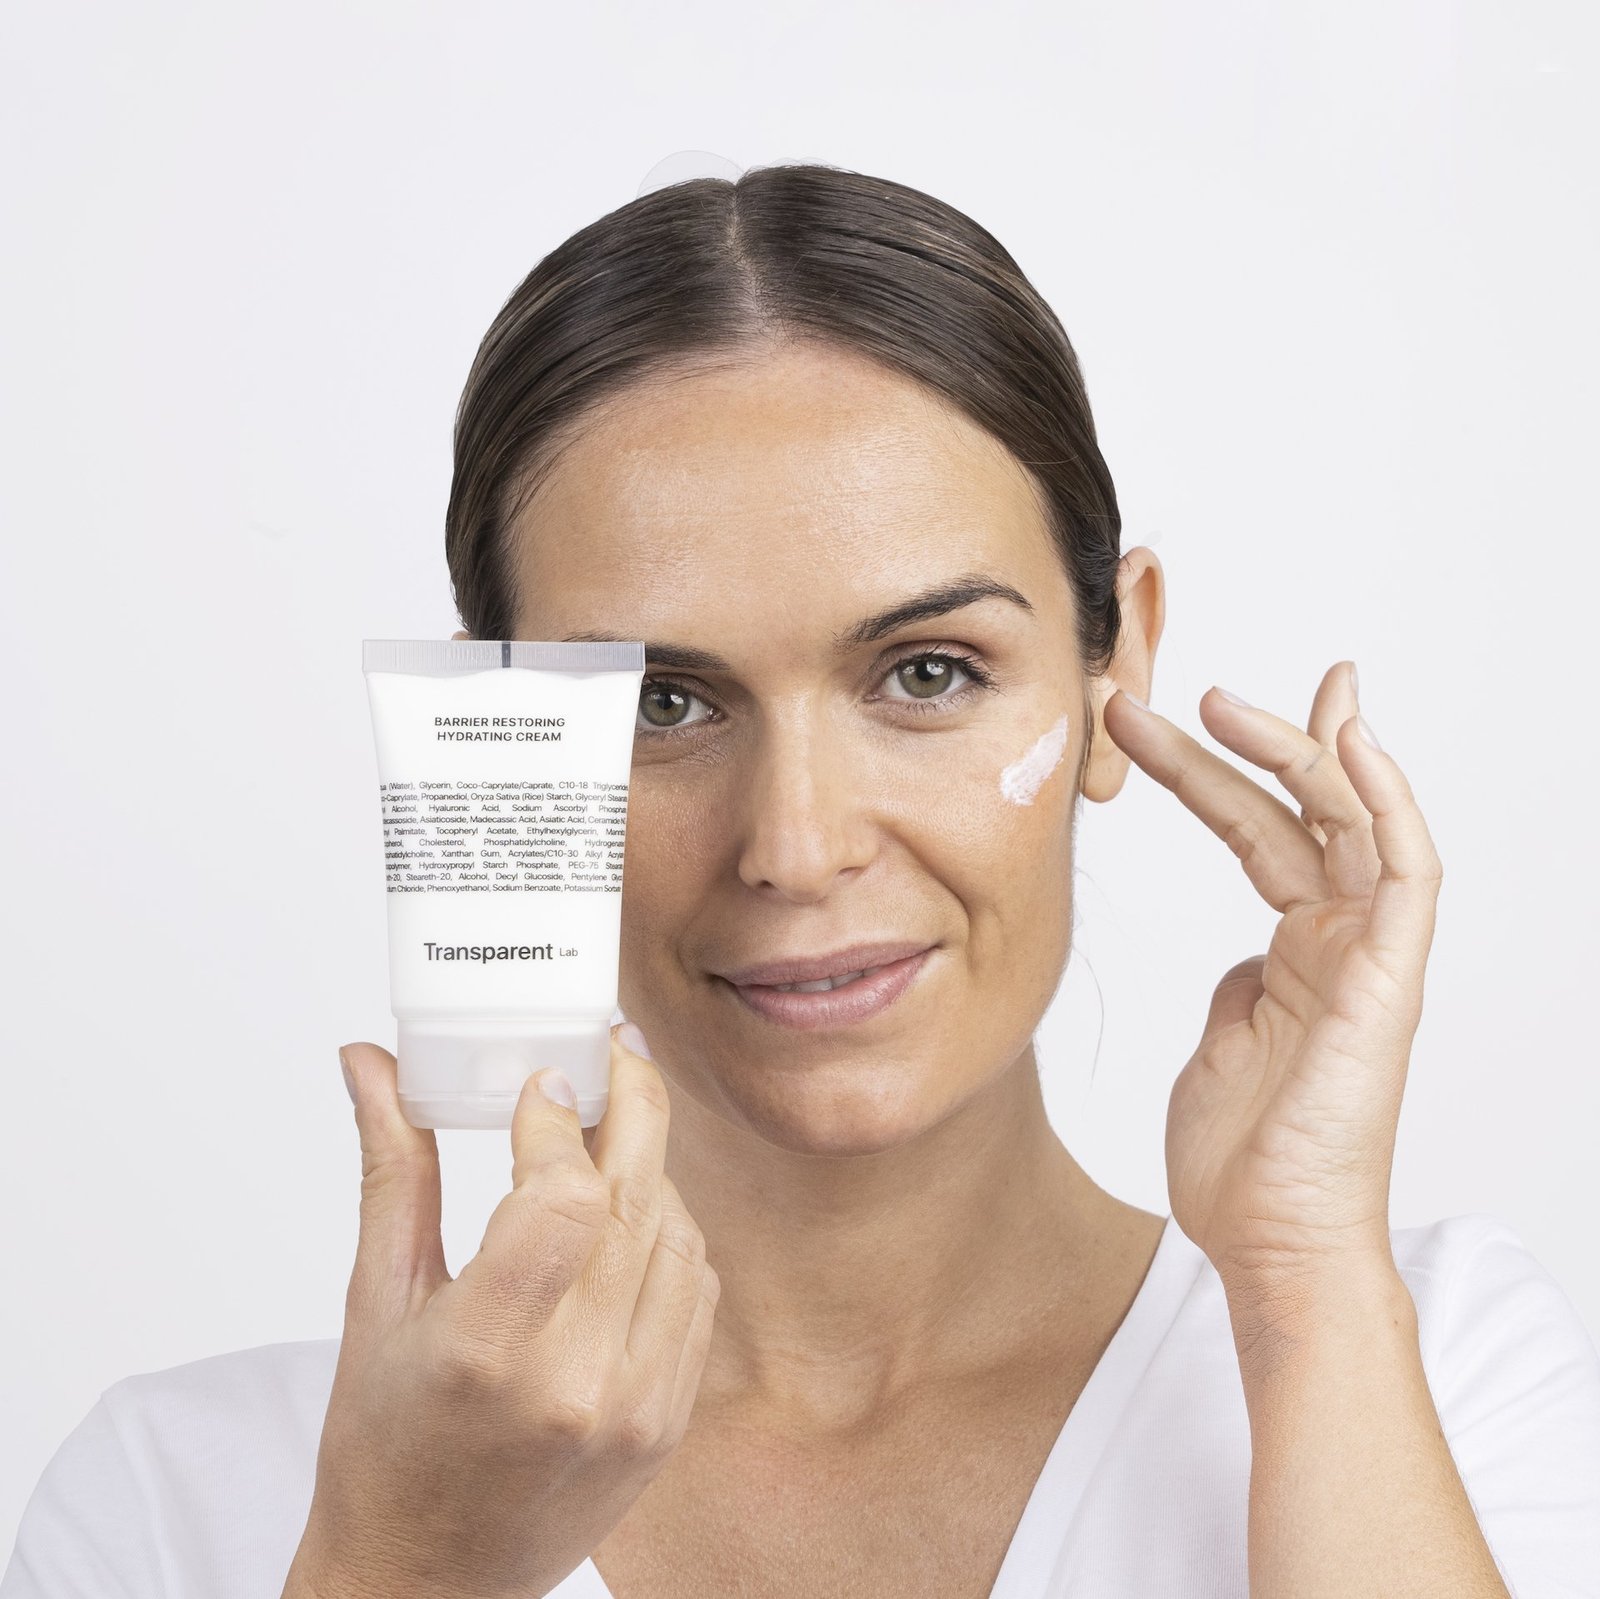 Niche Beauty Lab Transparent Lab Barrier Restoring Hydrating Cream 50 ml